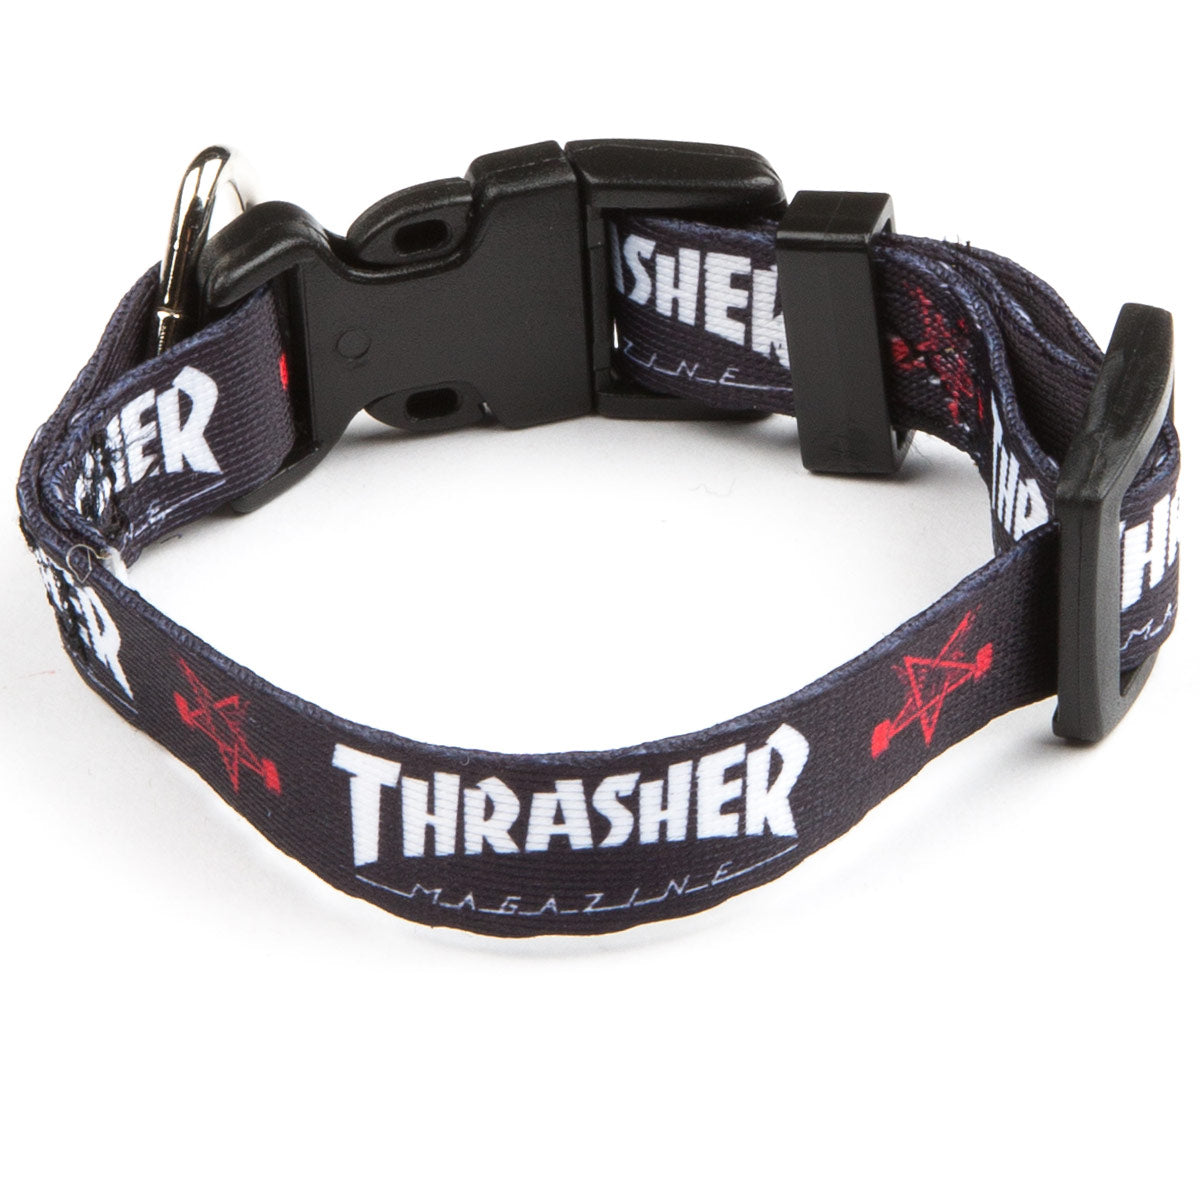 Thrasher Adjustable Dog Collar image 1